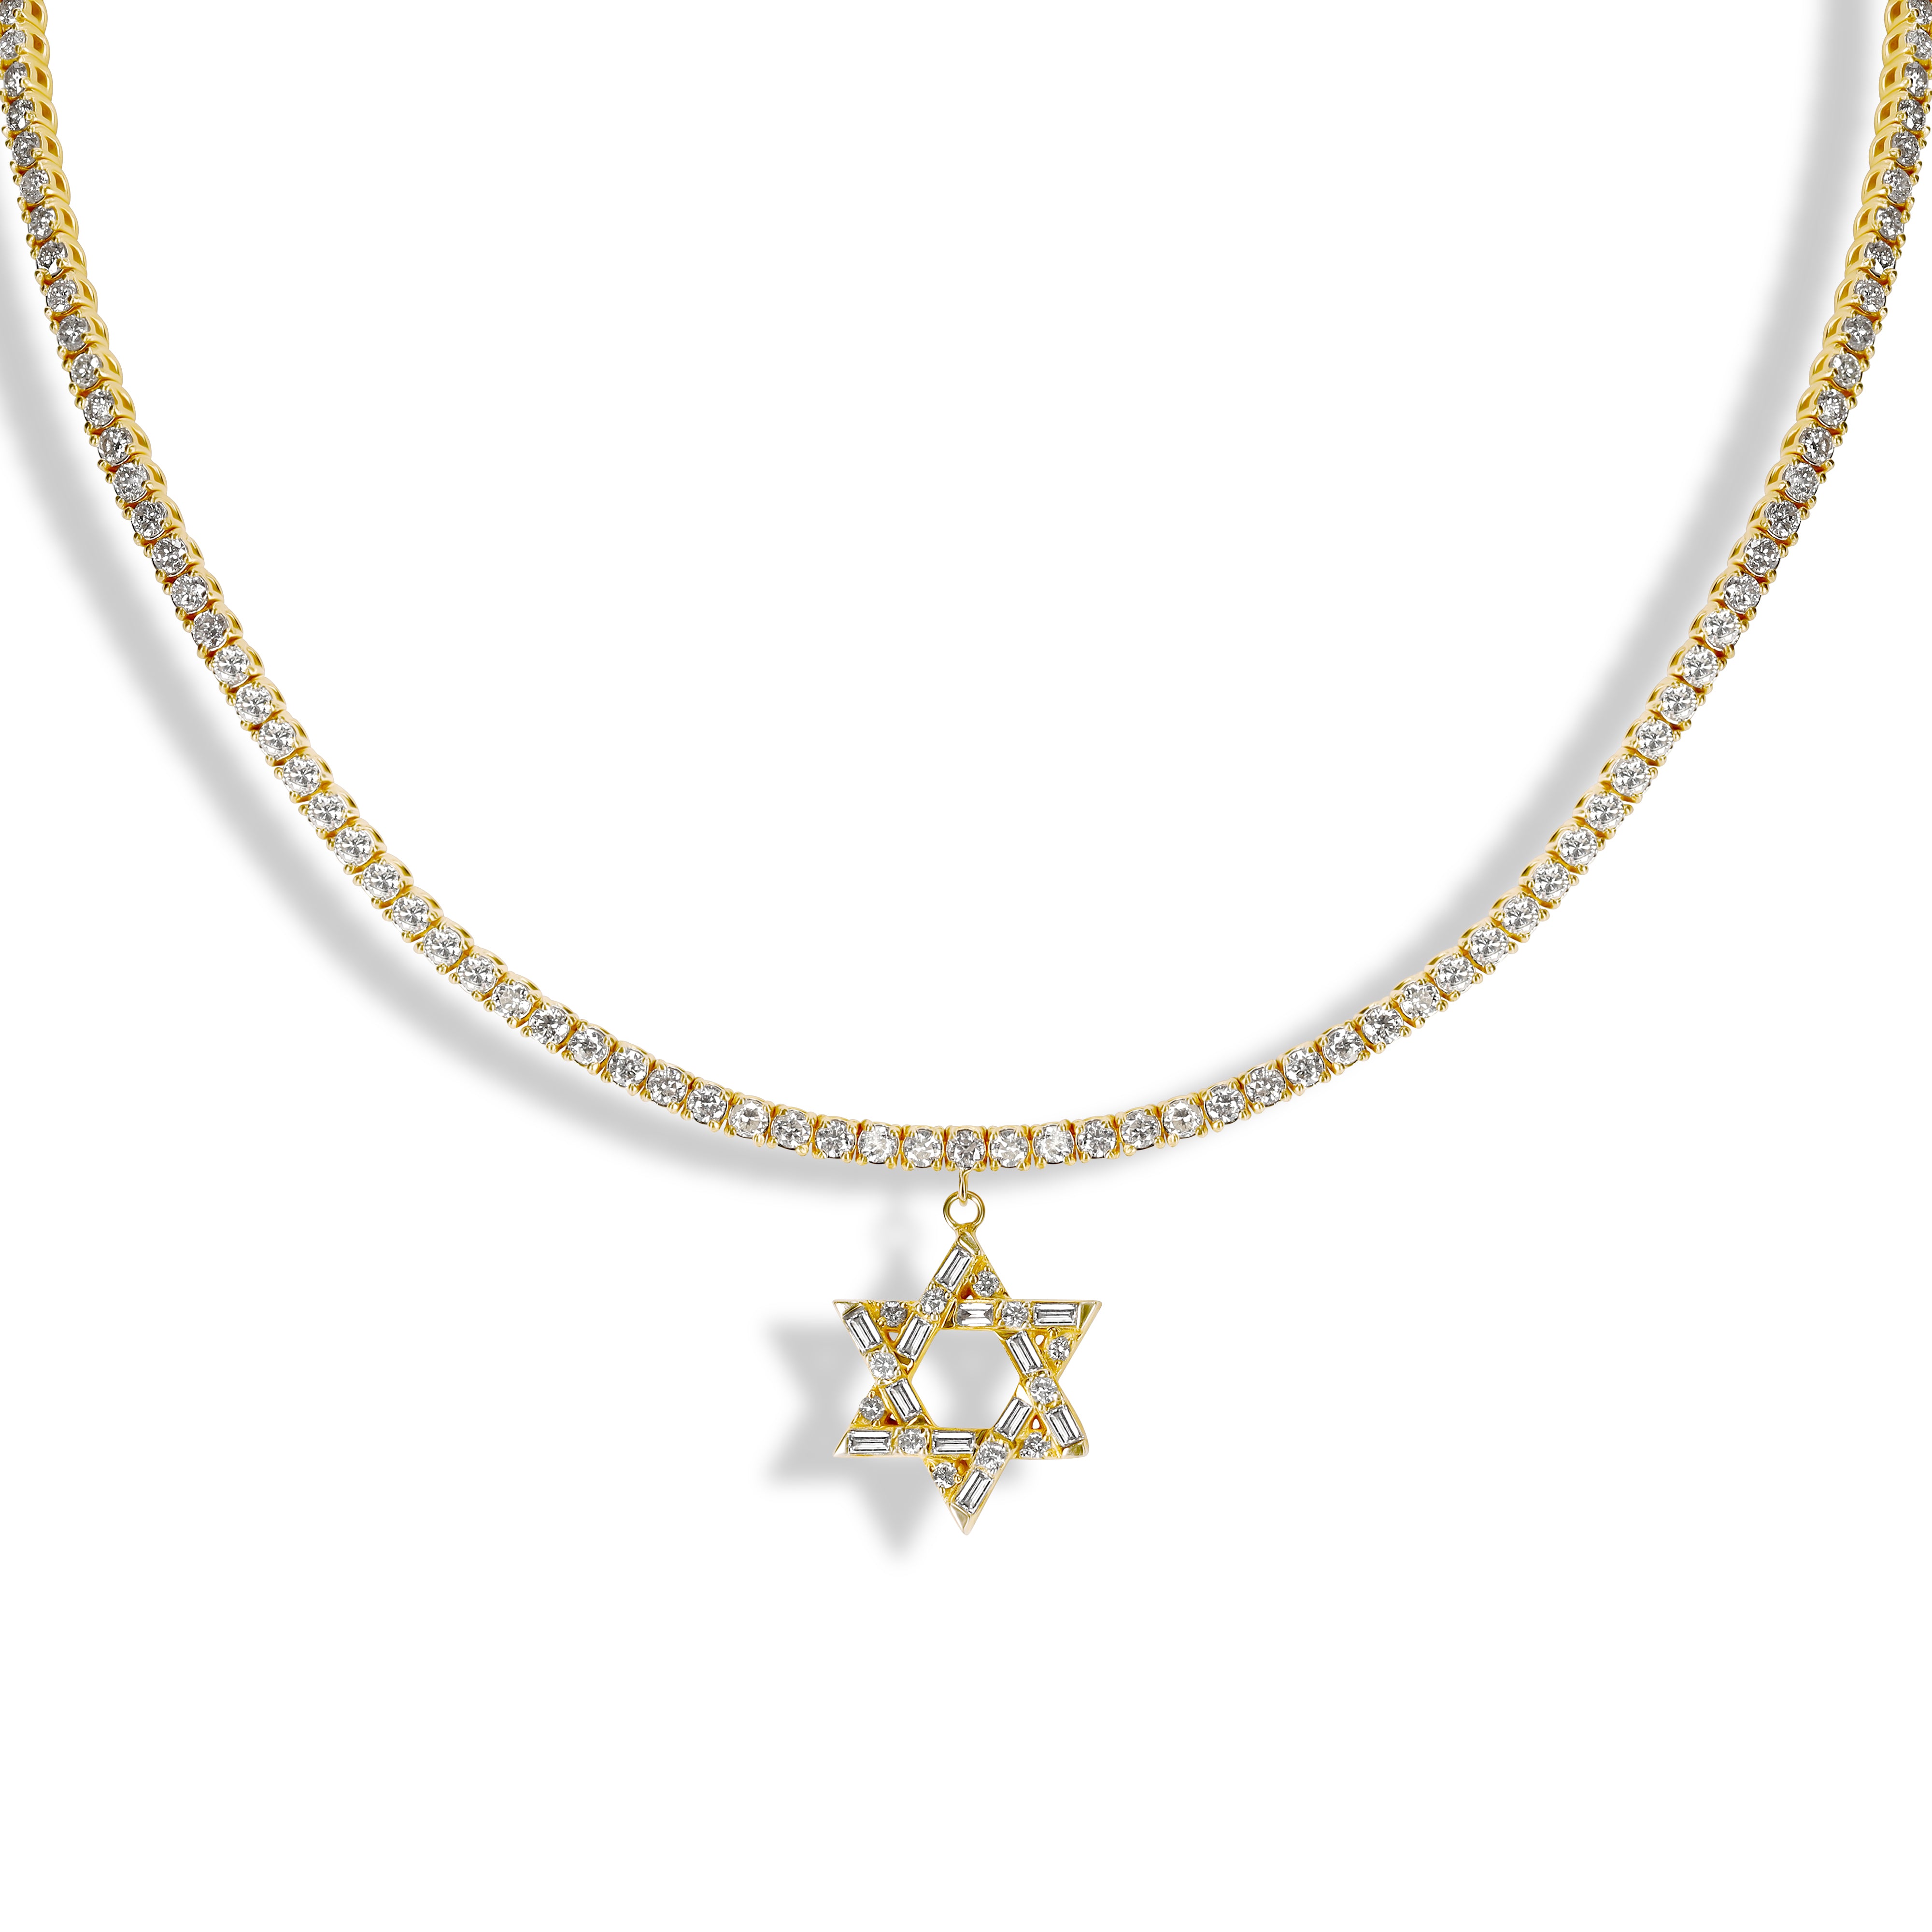 The Mazel Tennis Necklace